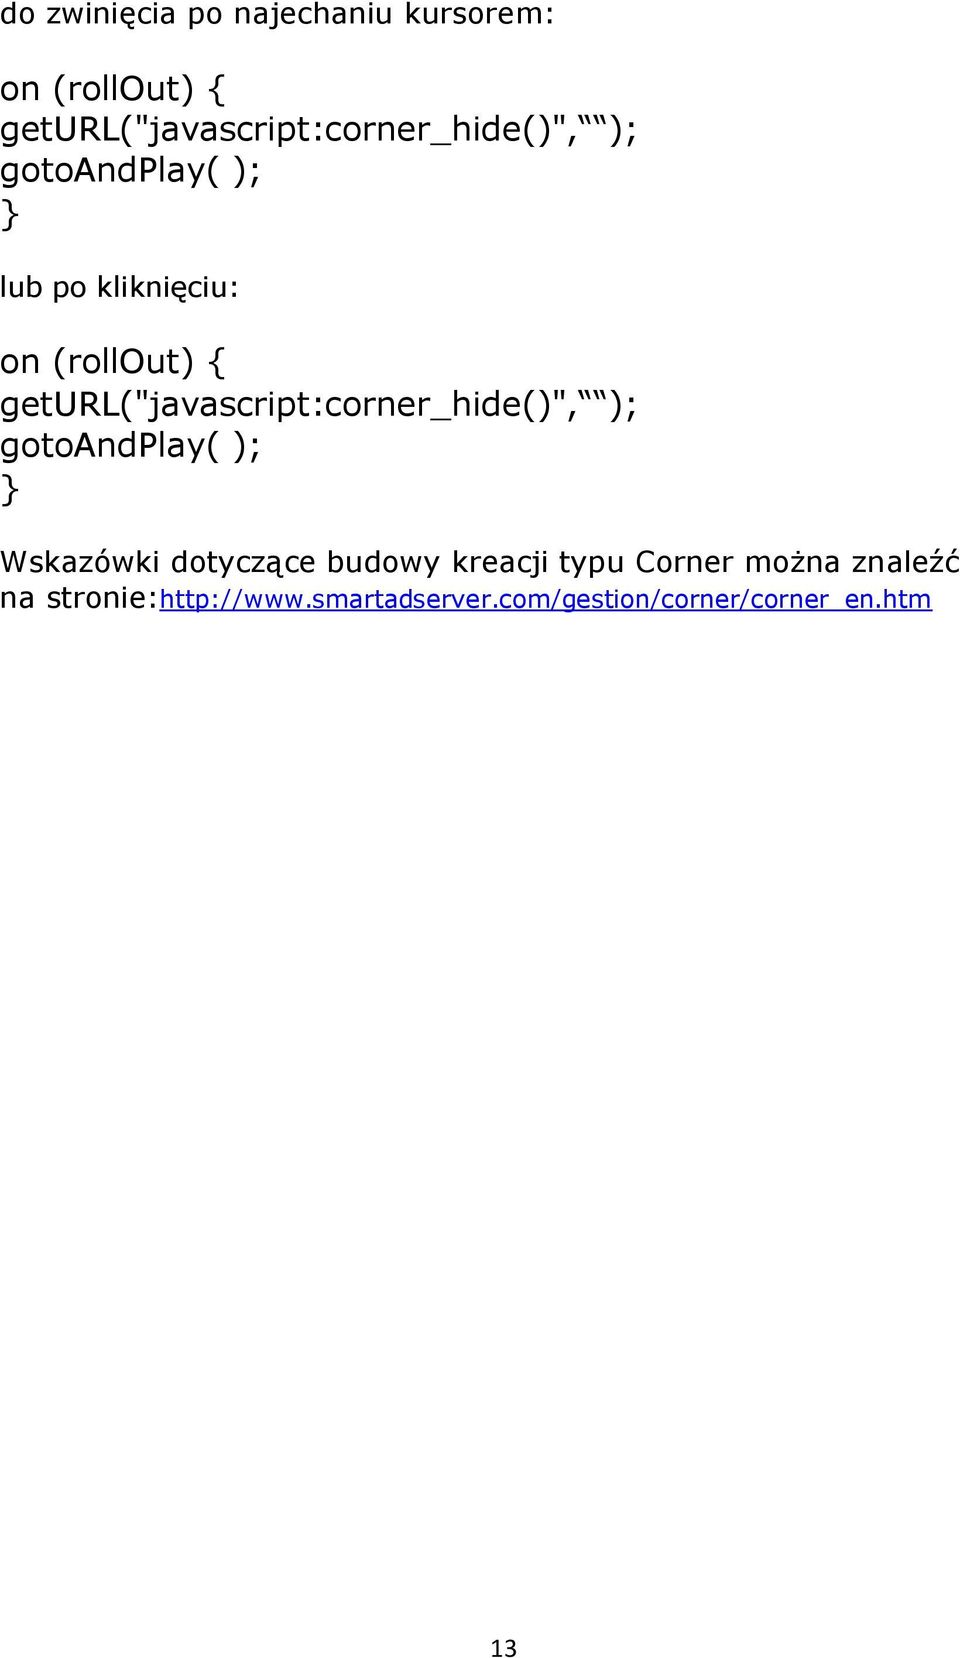 (rollout) { geturl("javascript:corner_hide()", ); gotoandplay( ); Wskazówki